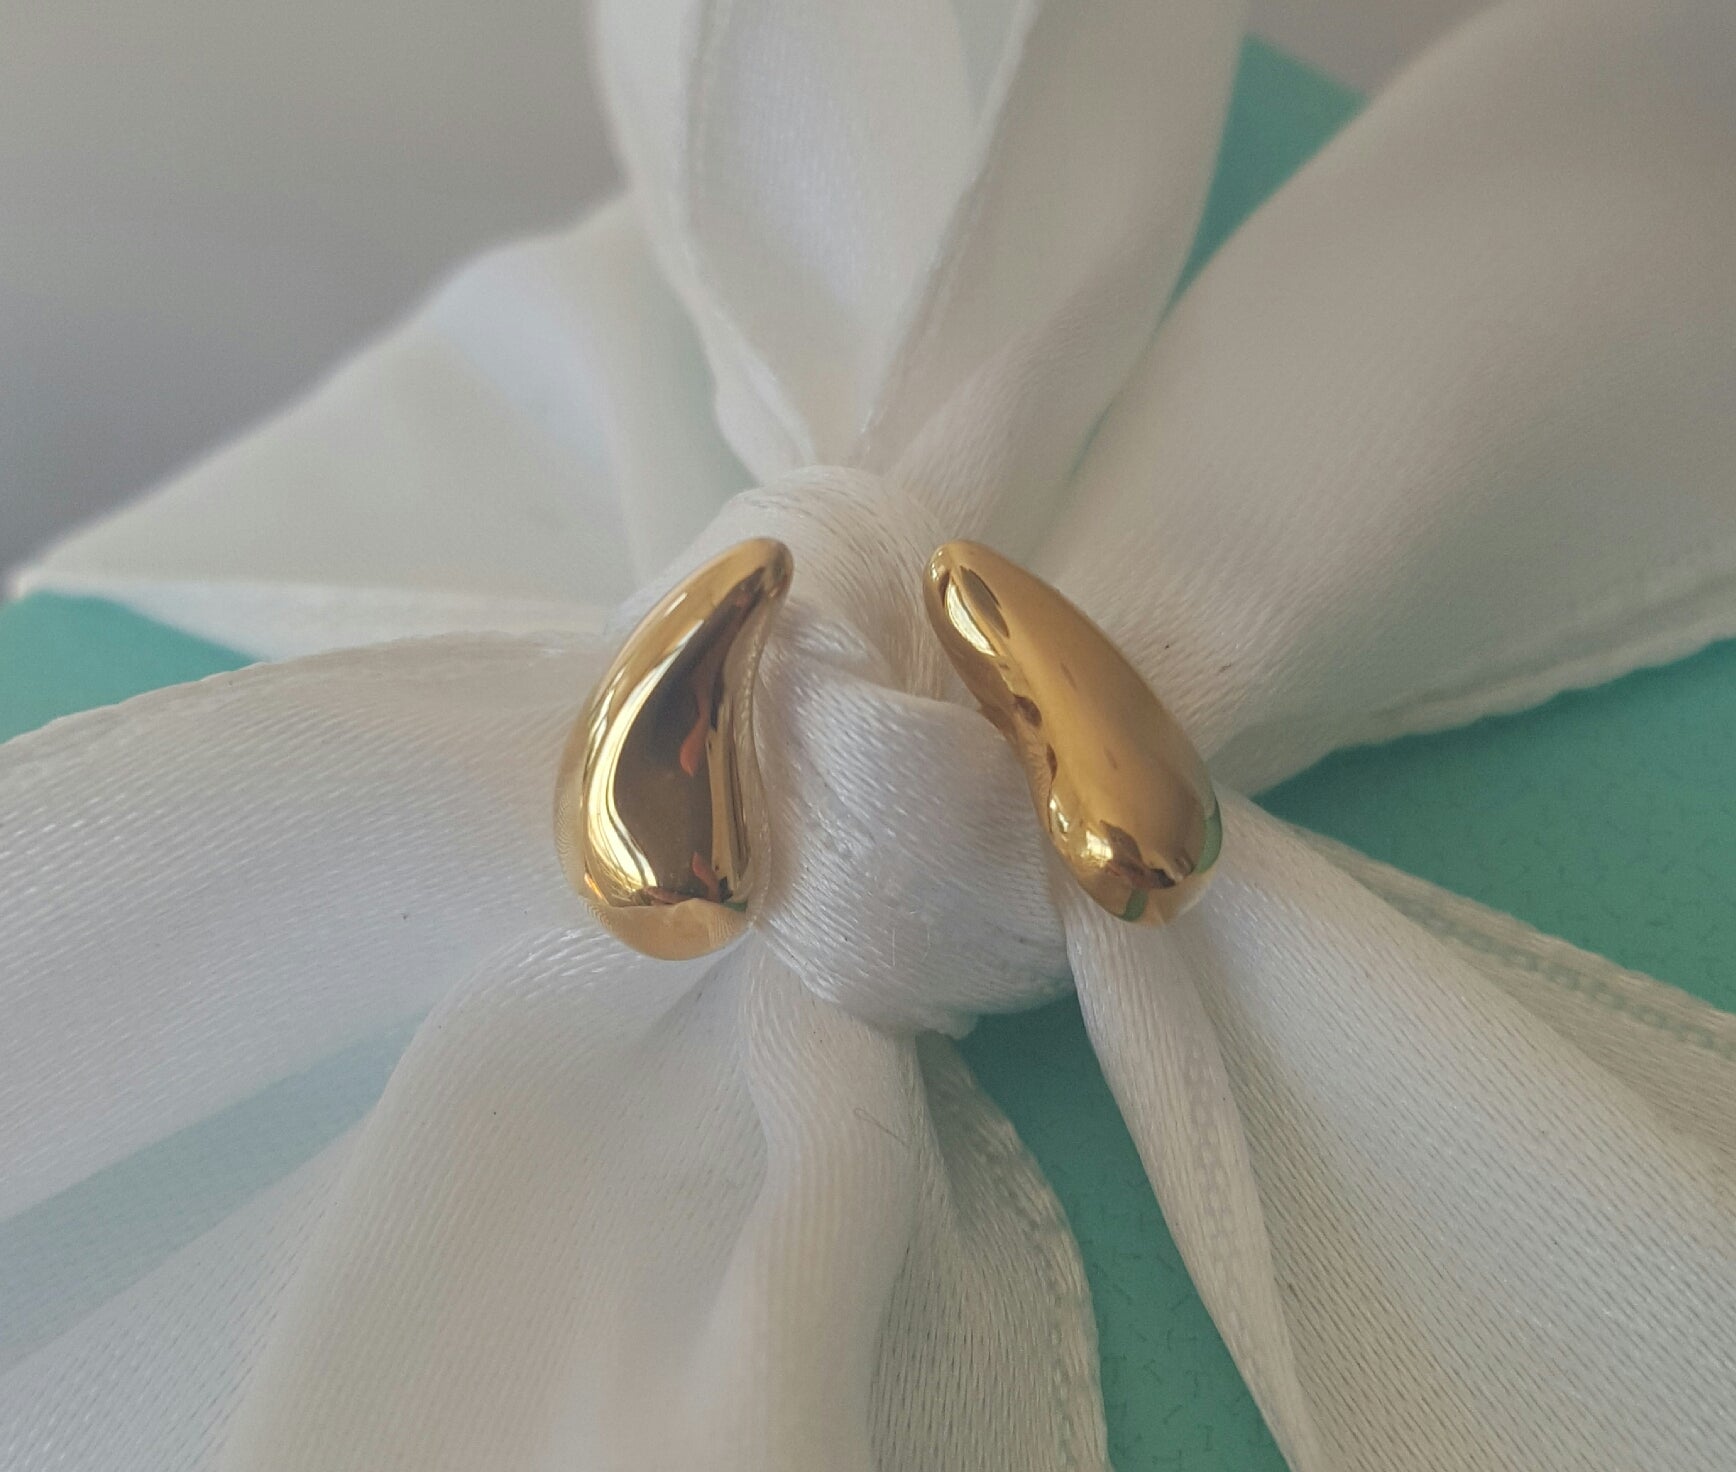 Tiffany & Co. 18ct Yellow Gold Elsa Peretti Tear Drop Earrings RRP $1500